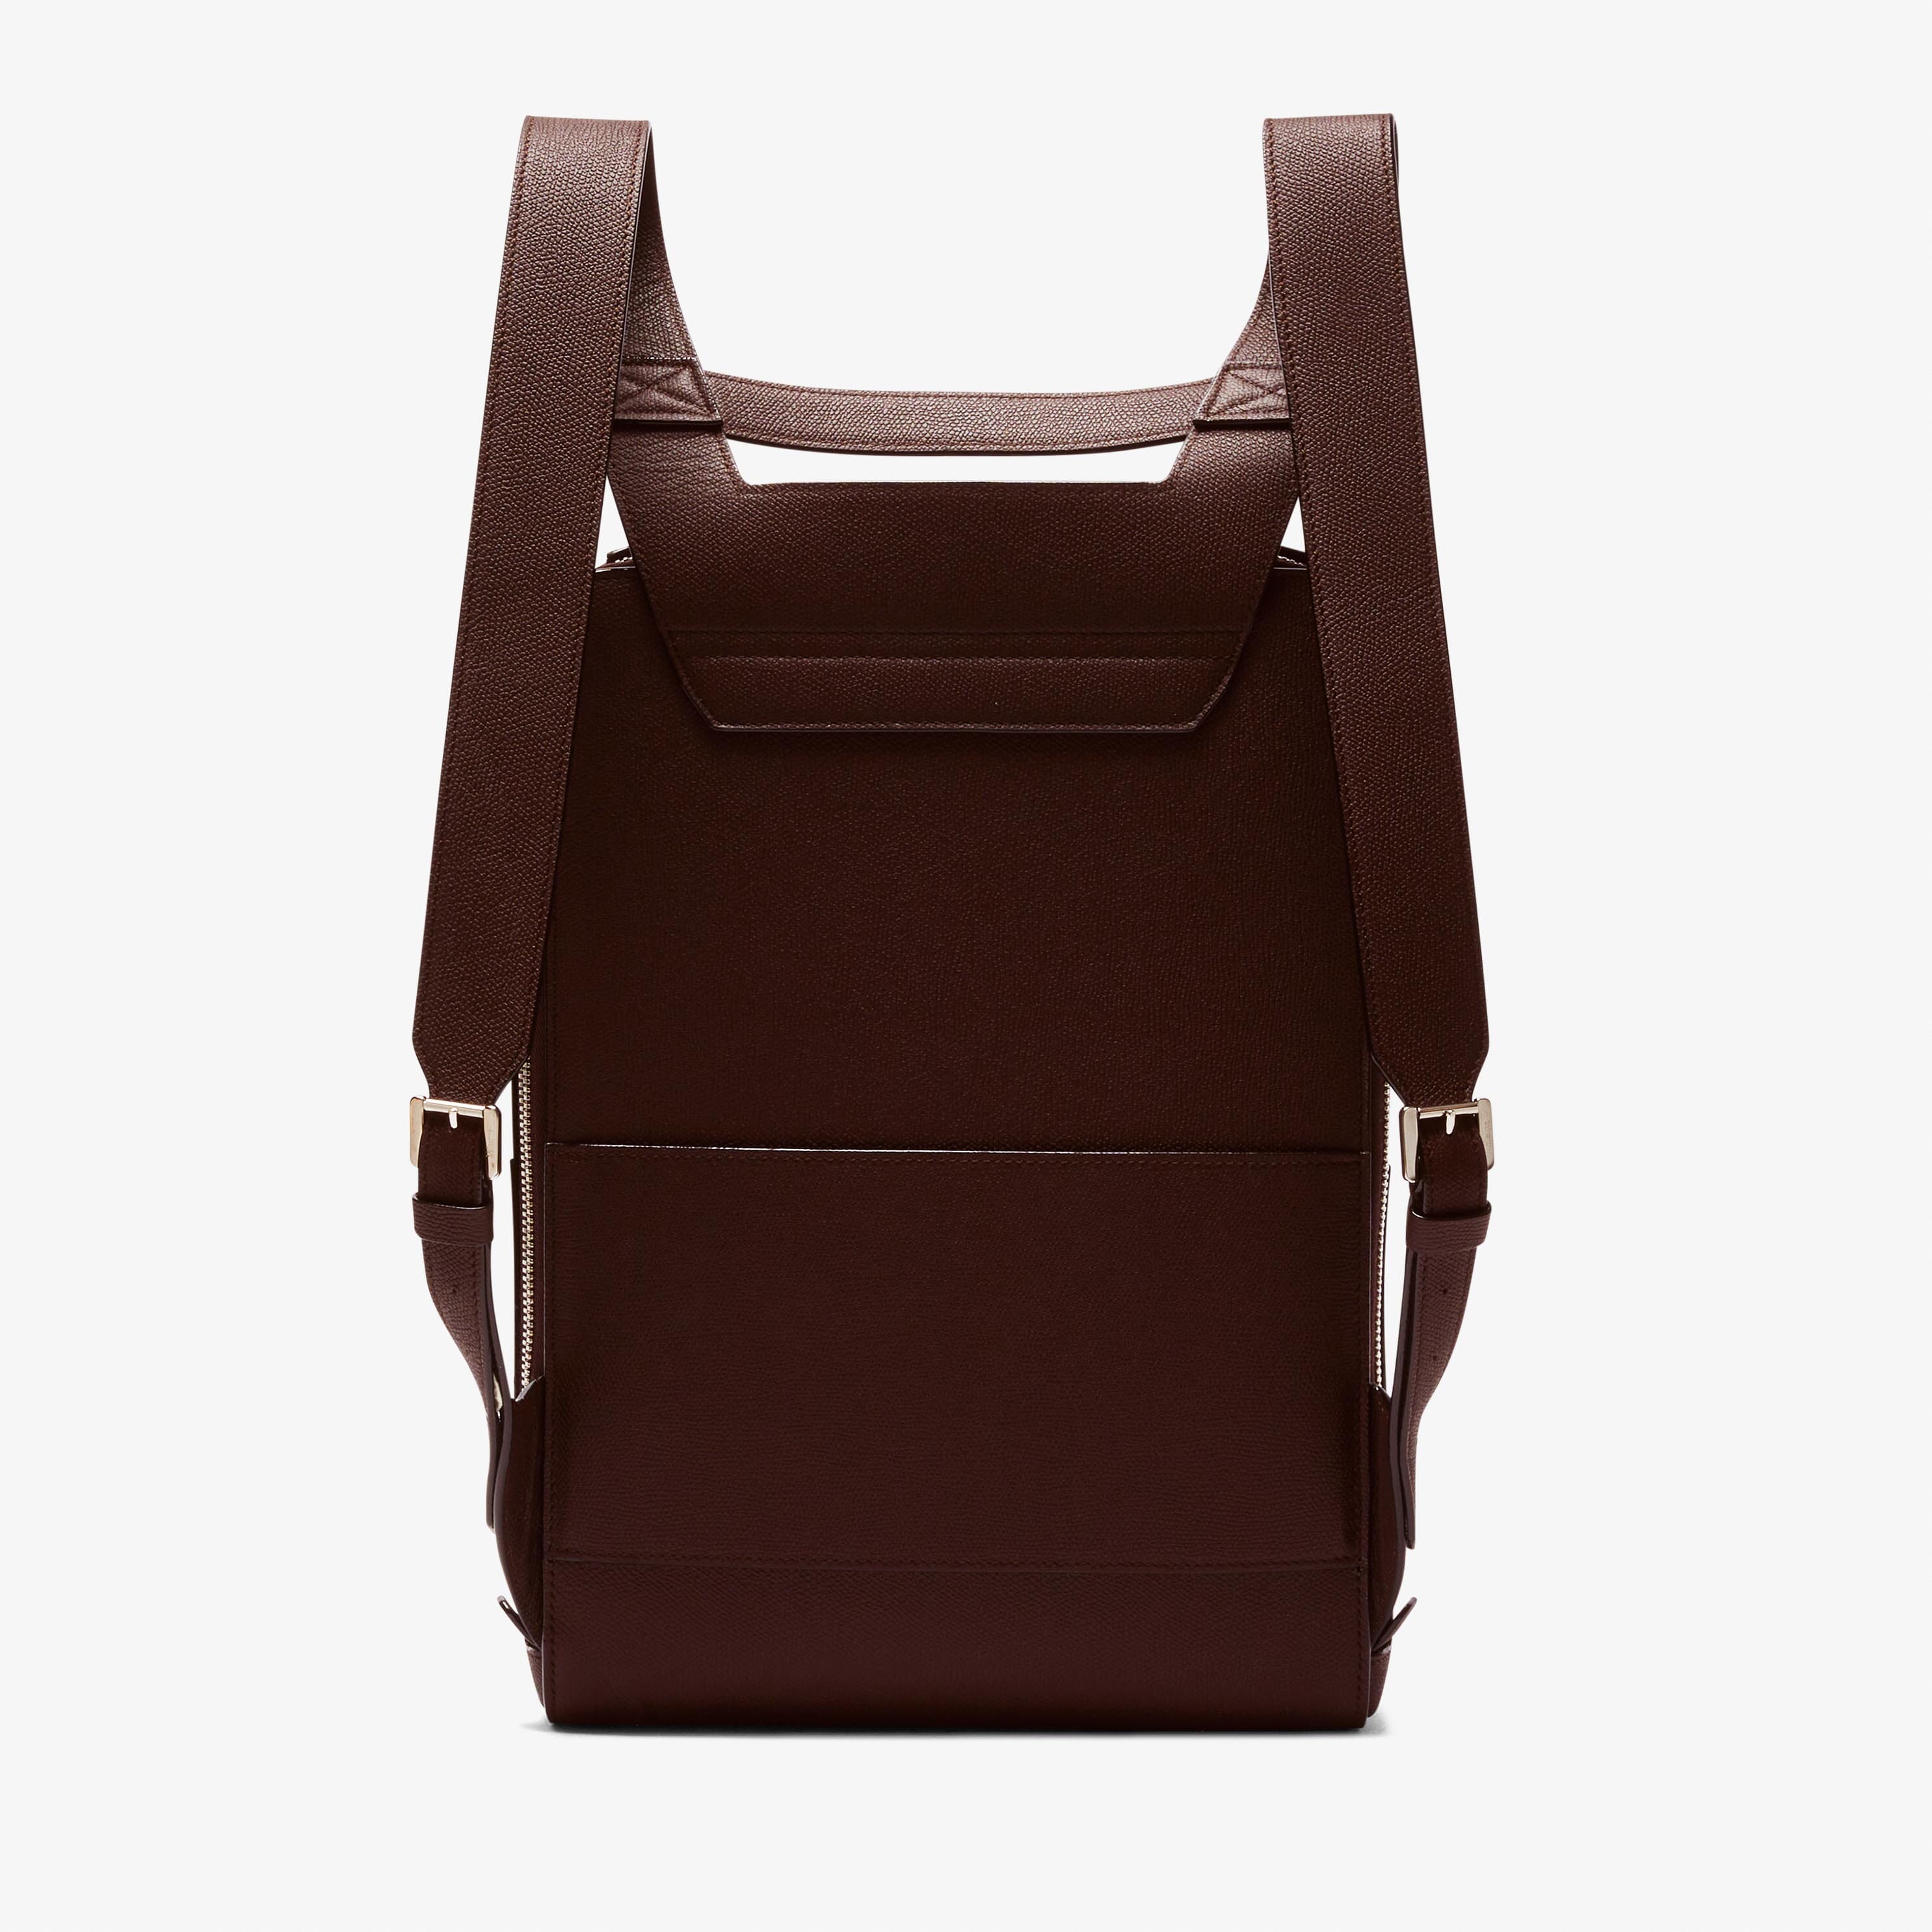 V-Line two shoulder Backpack - Coffee Brown - Vitello VS - Valextra - 5